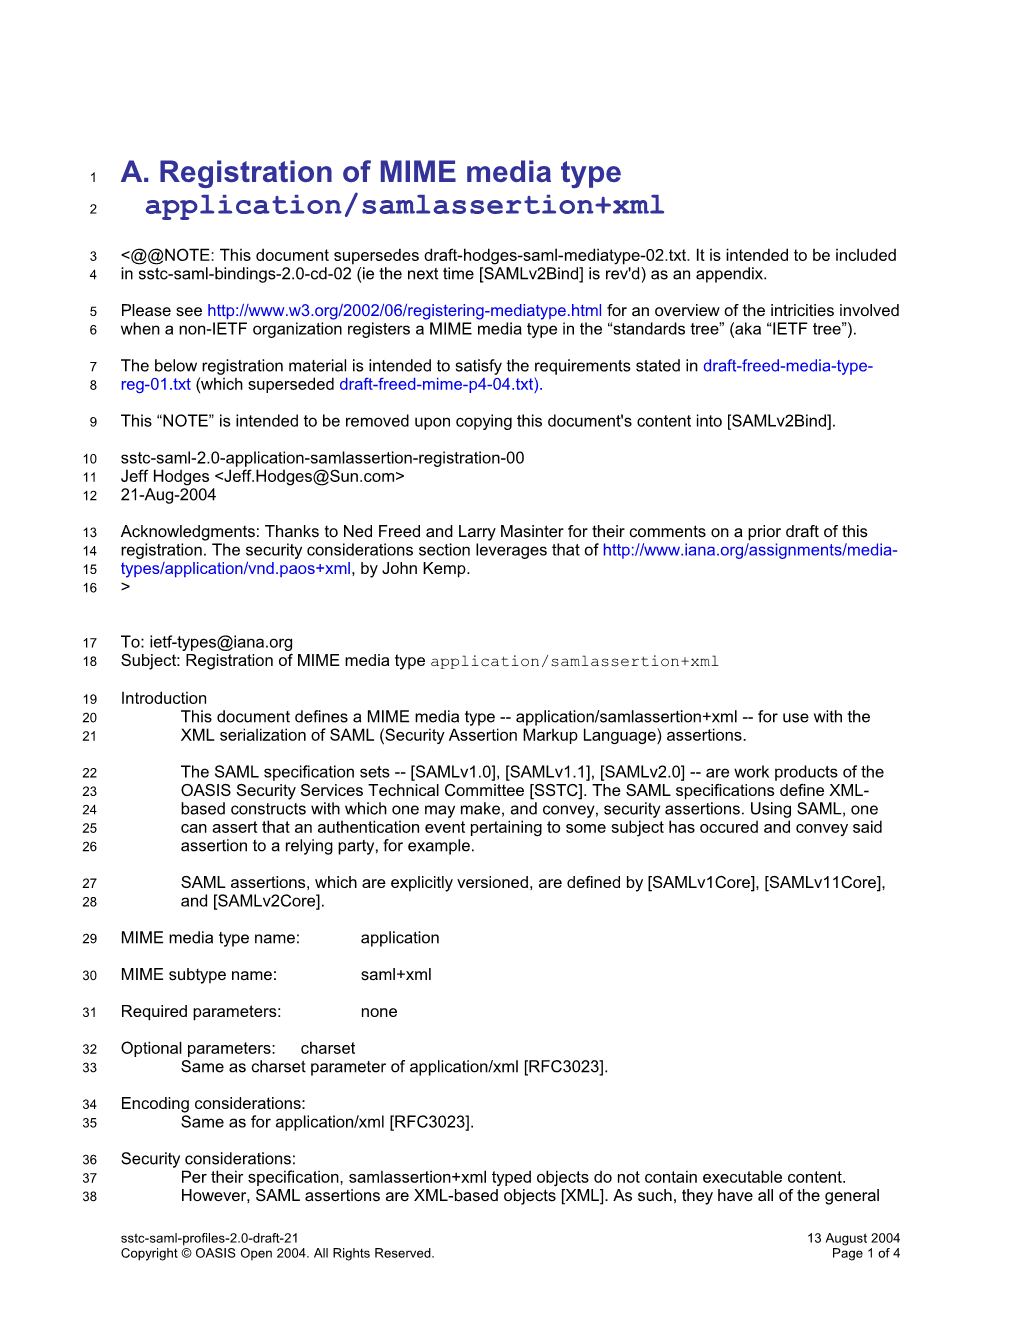 A. Registration of MIME Media Type Application/Samlassertion+Xml